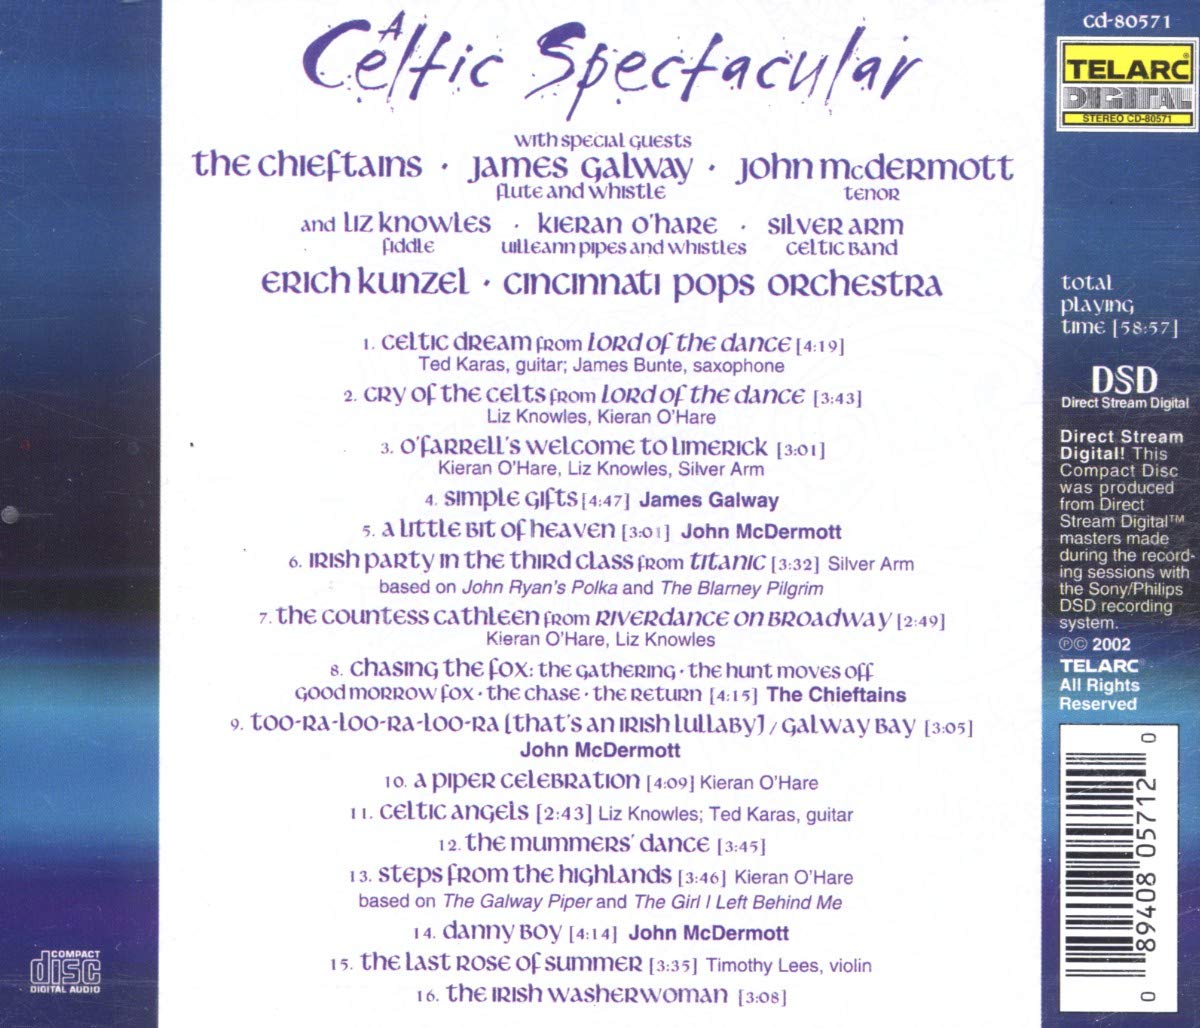 A CELTIC SPECTACULAR - Erich Kunzel, Cincinnati Pops Orchestra